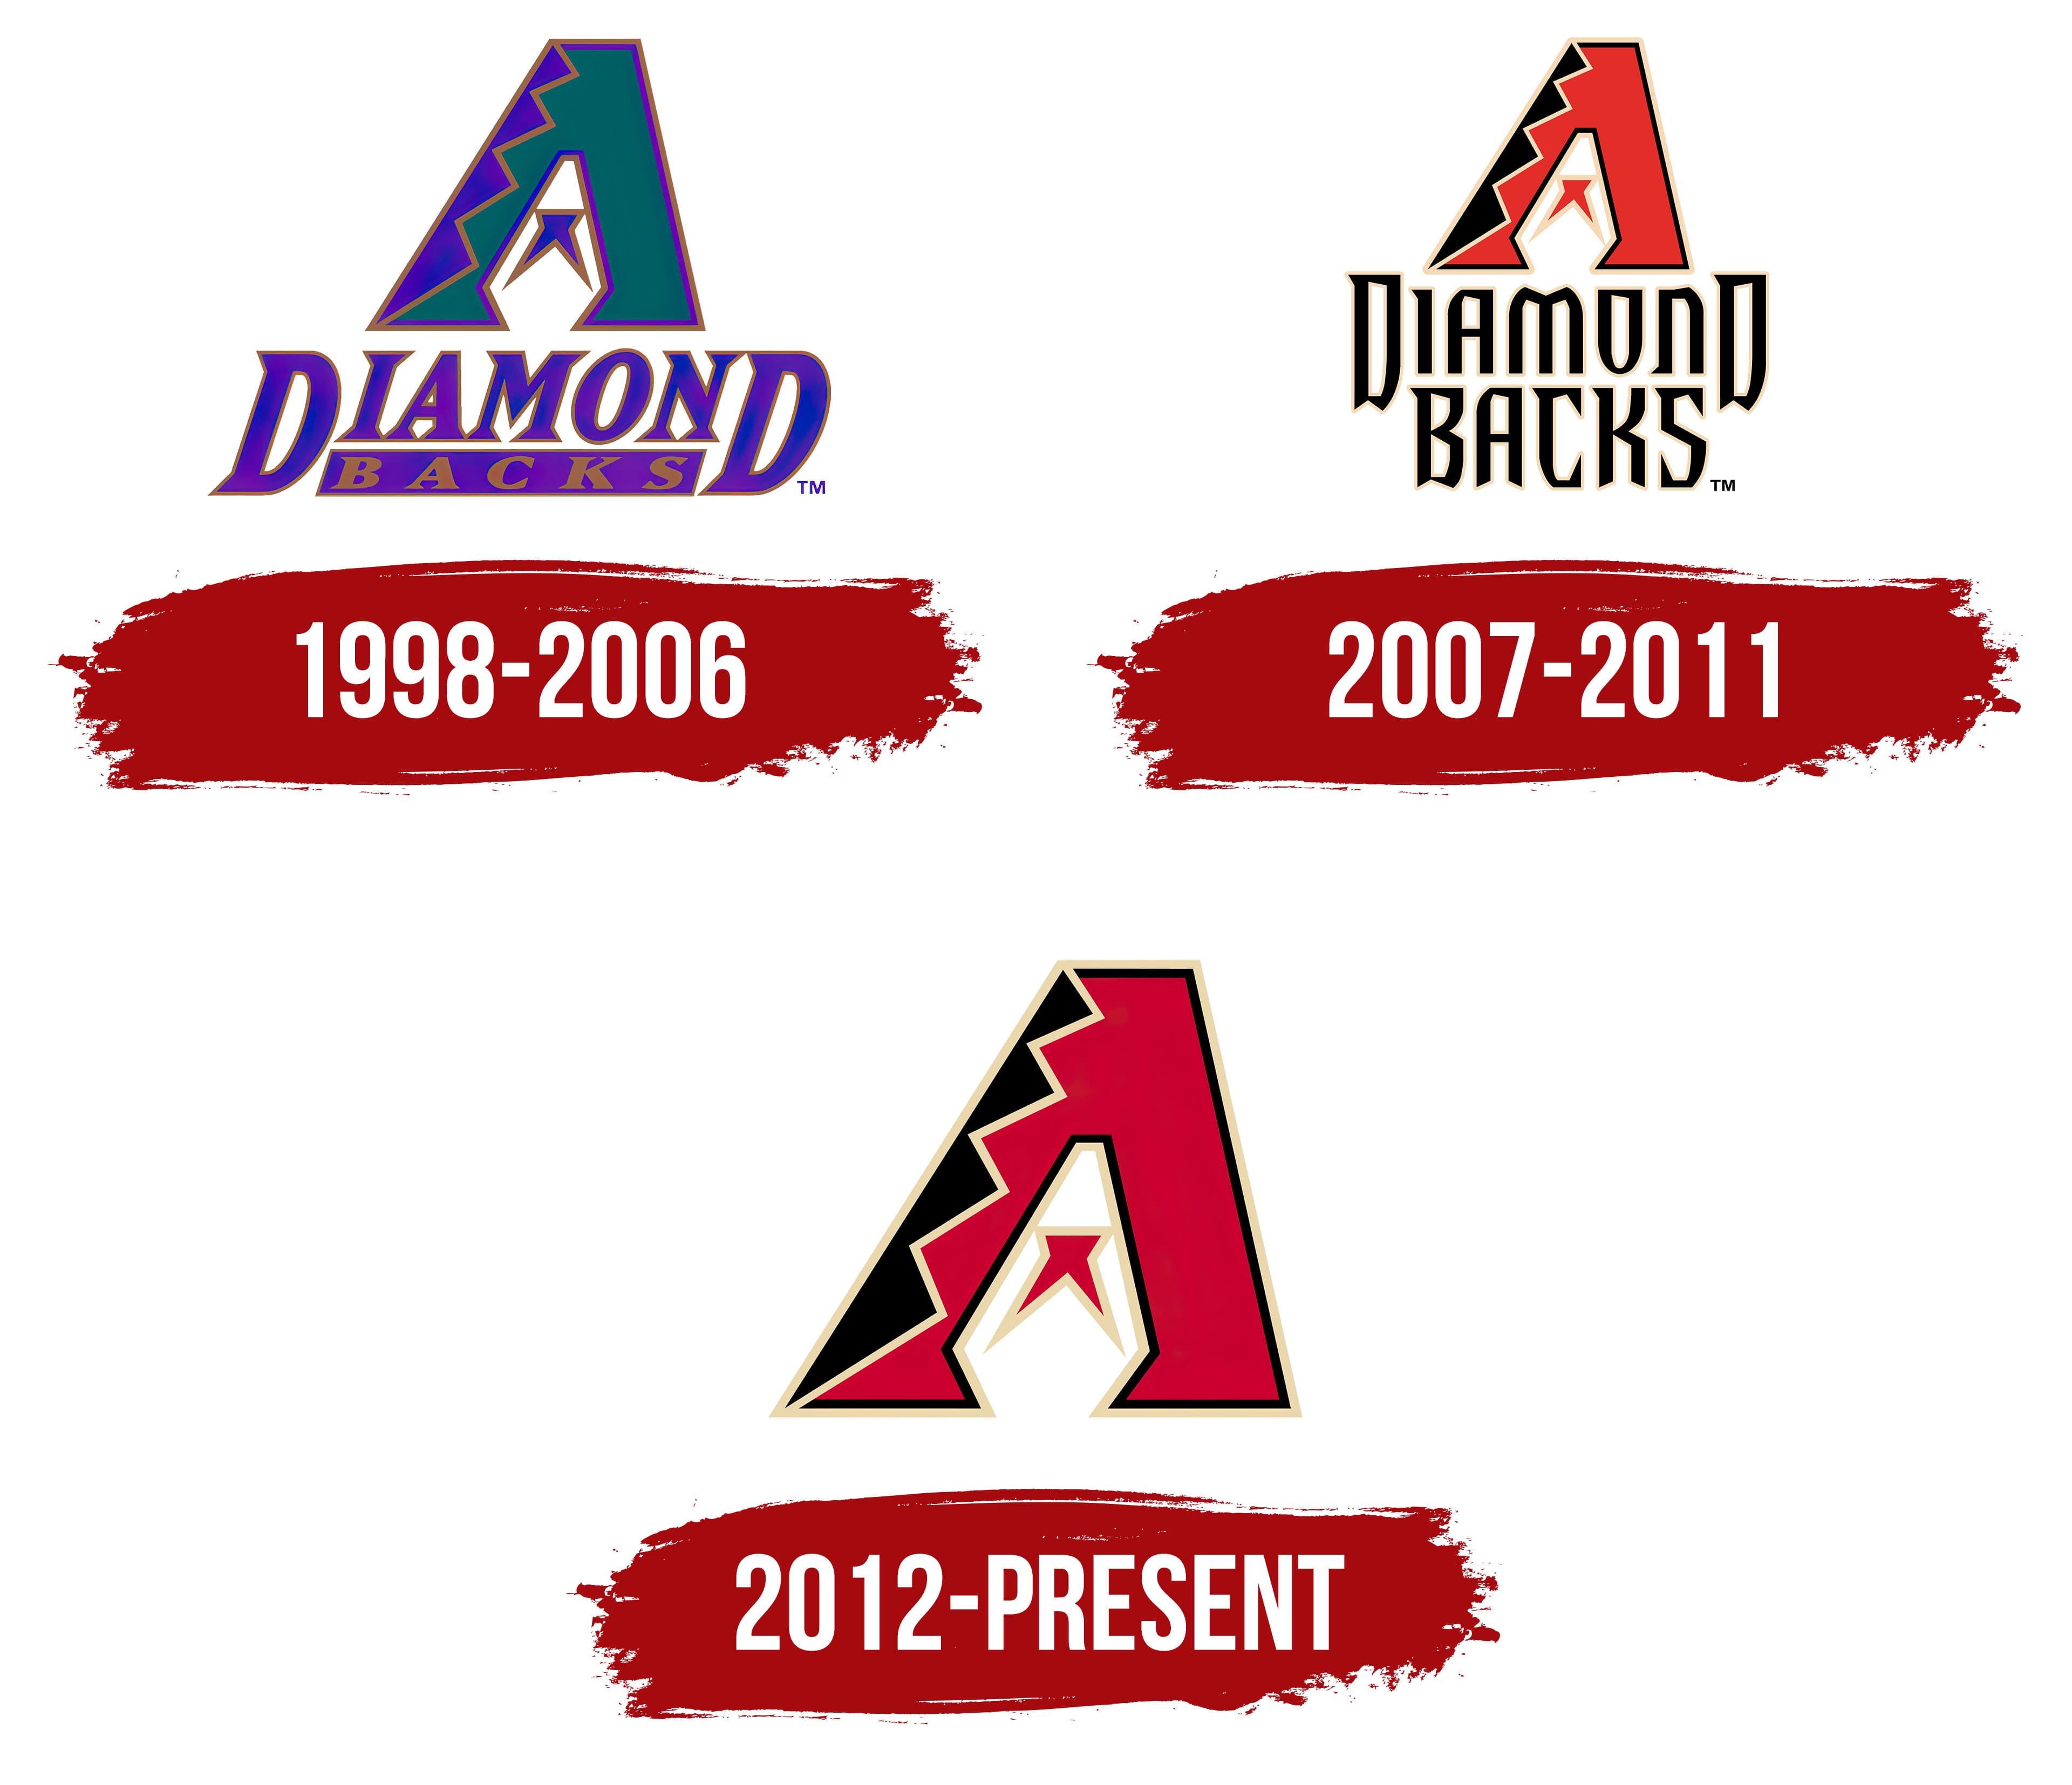 MLB Arizona Diamondbacks Vintage 2007 Color Me Mascot Team Logo